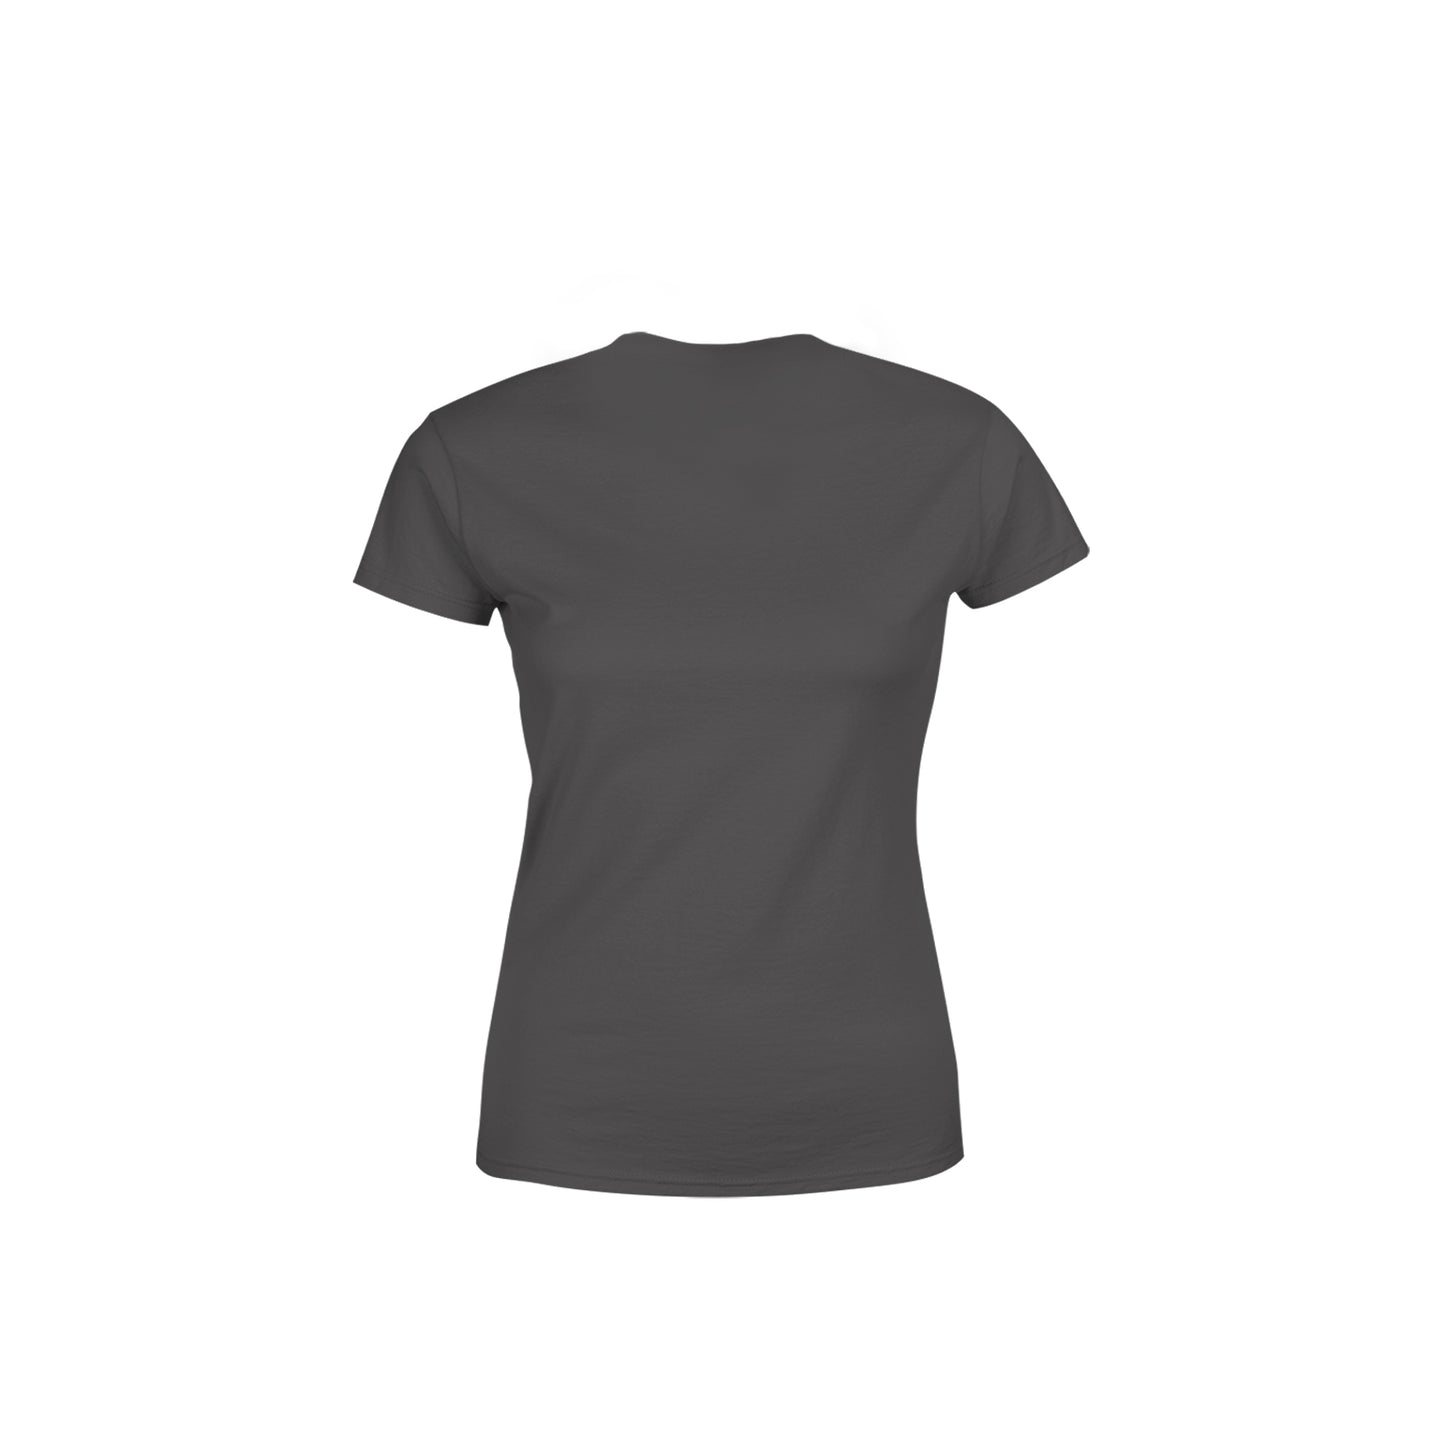 41 Number Women's T-Shirt (Charcoal Grey)